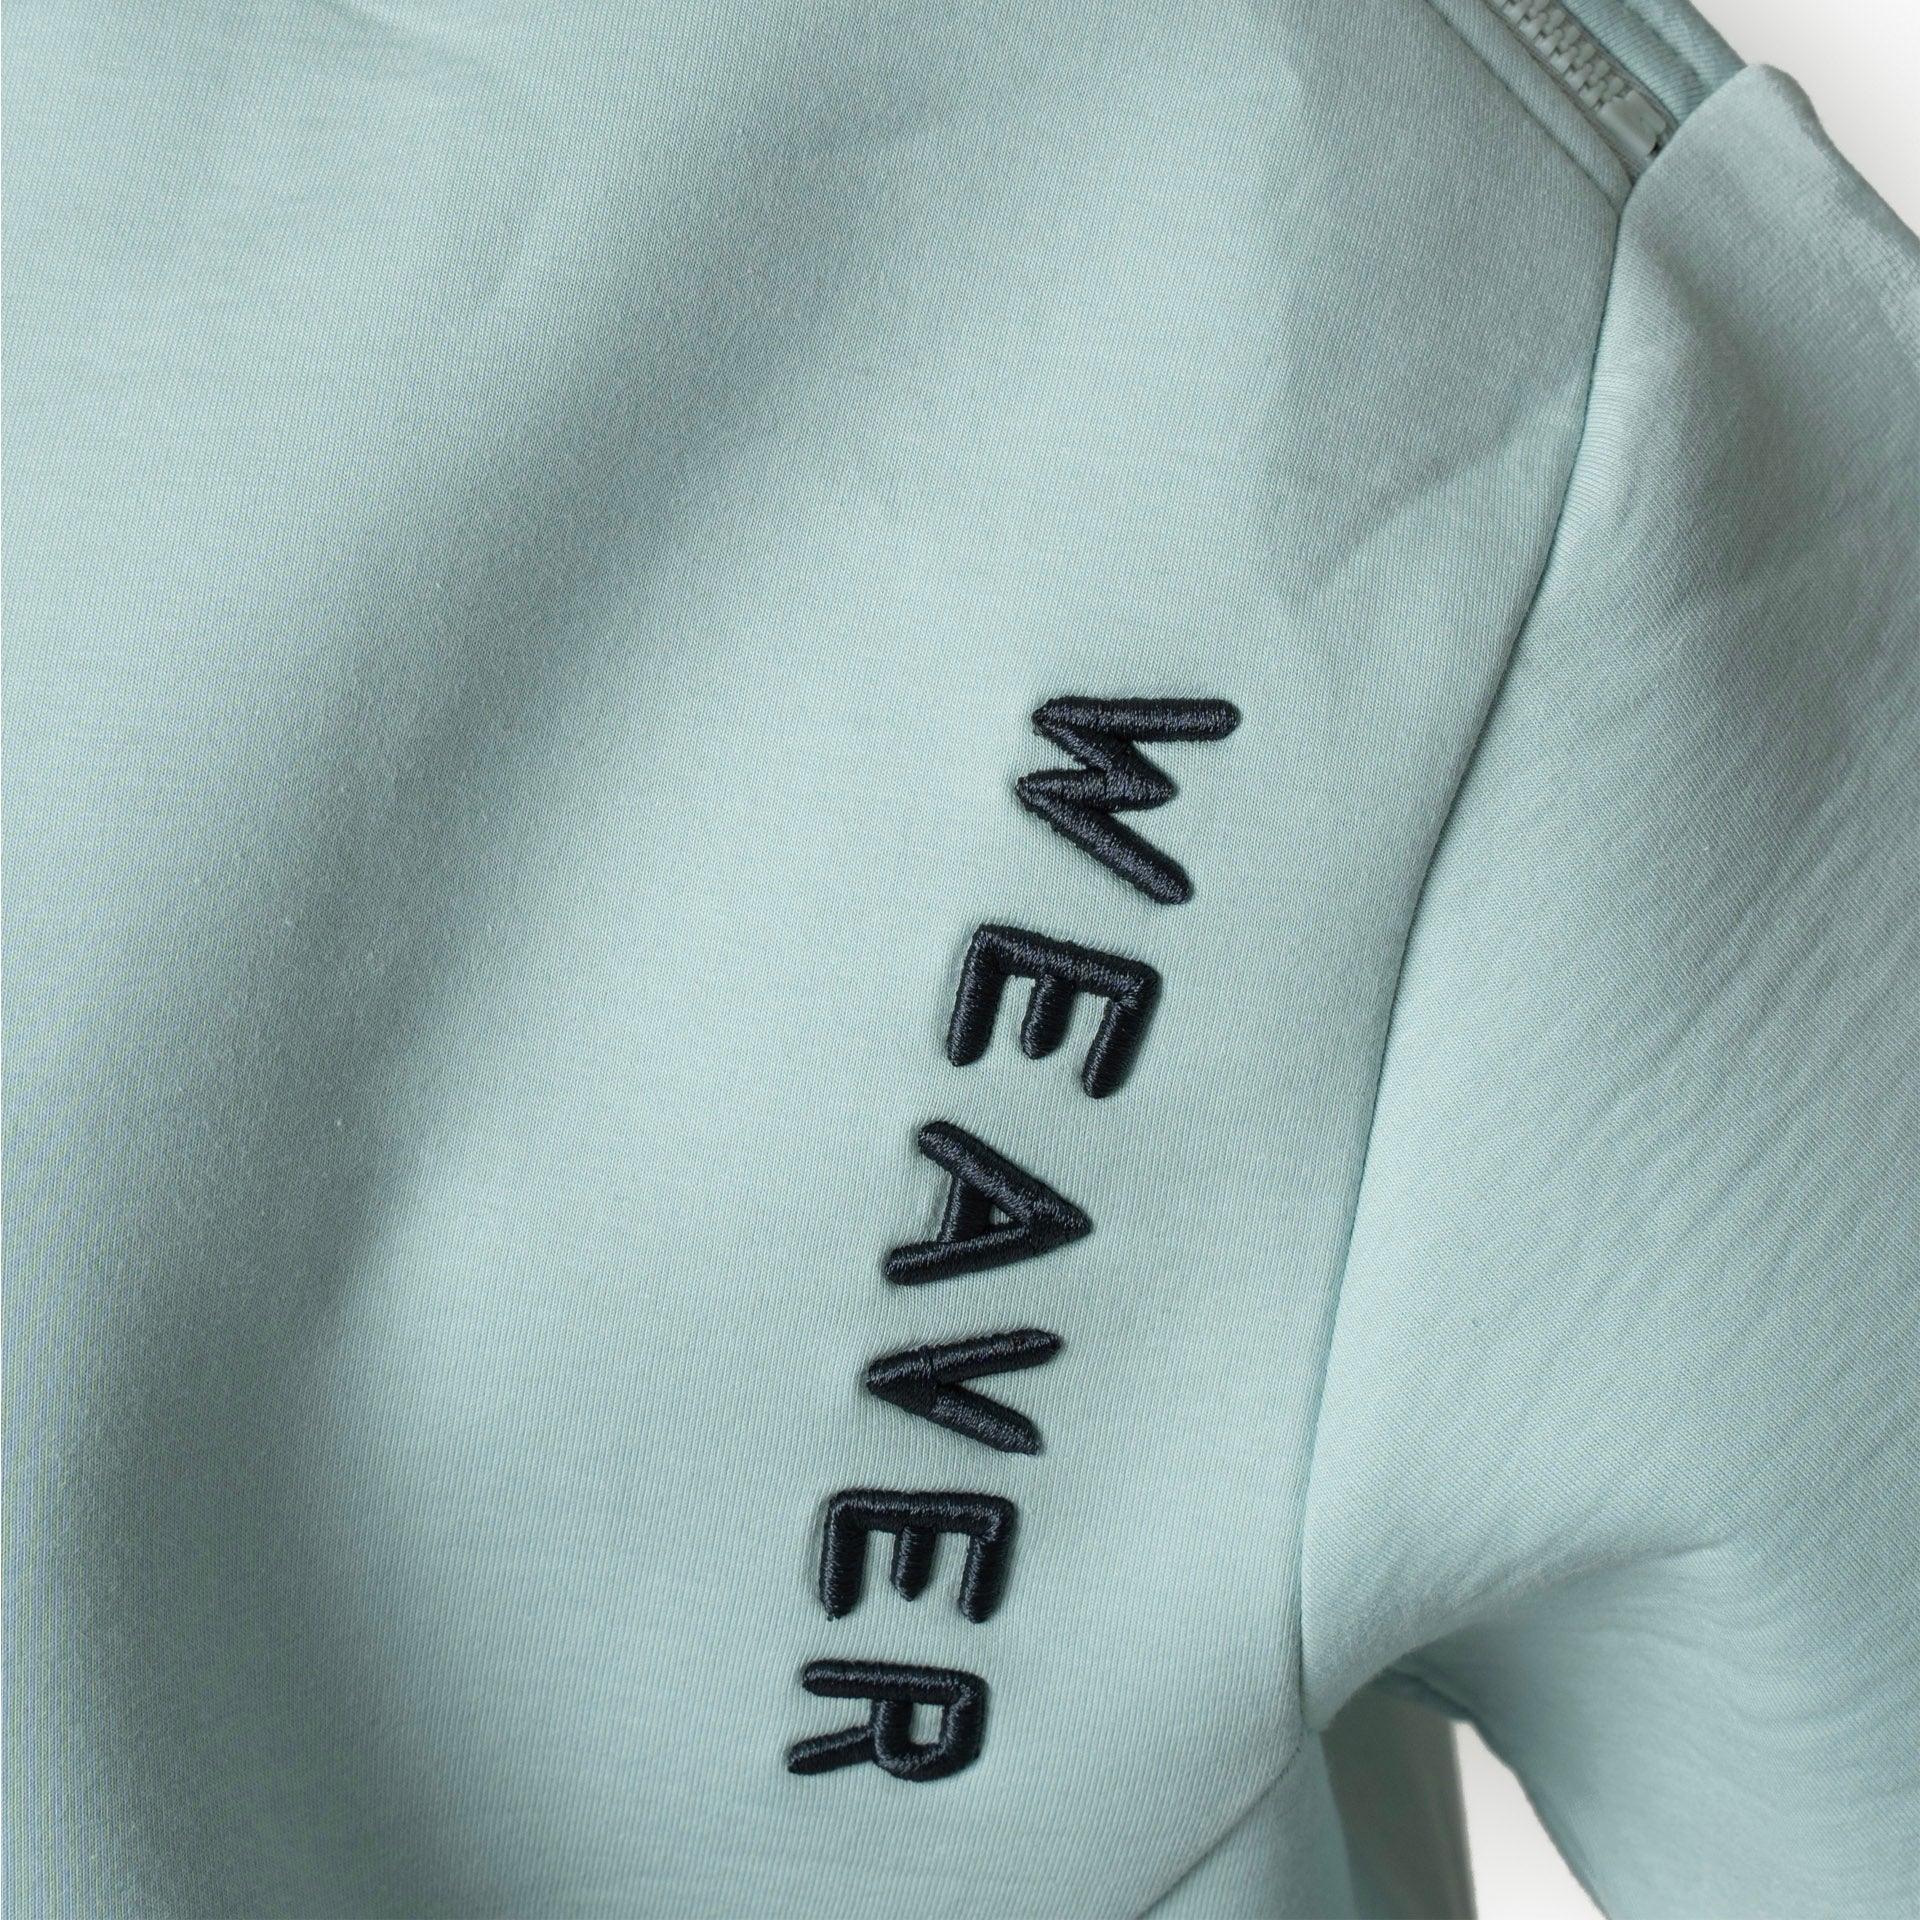 Sky Blue High Neck Shirt From Weaver Design - WECRE8